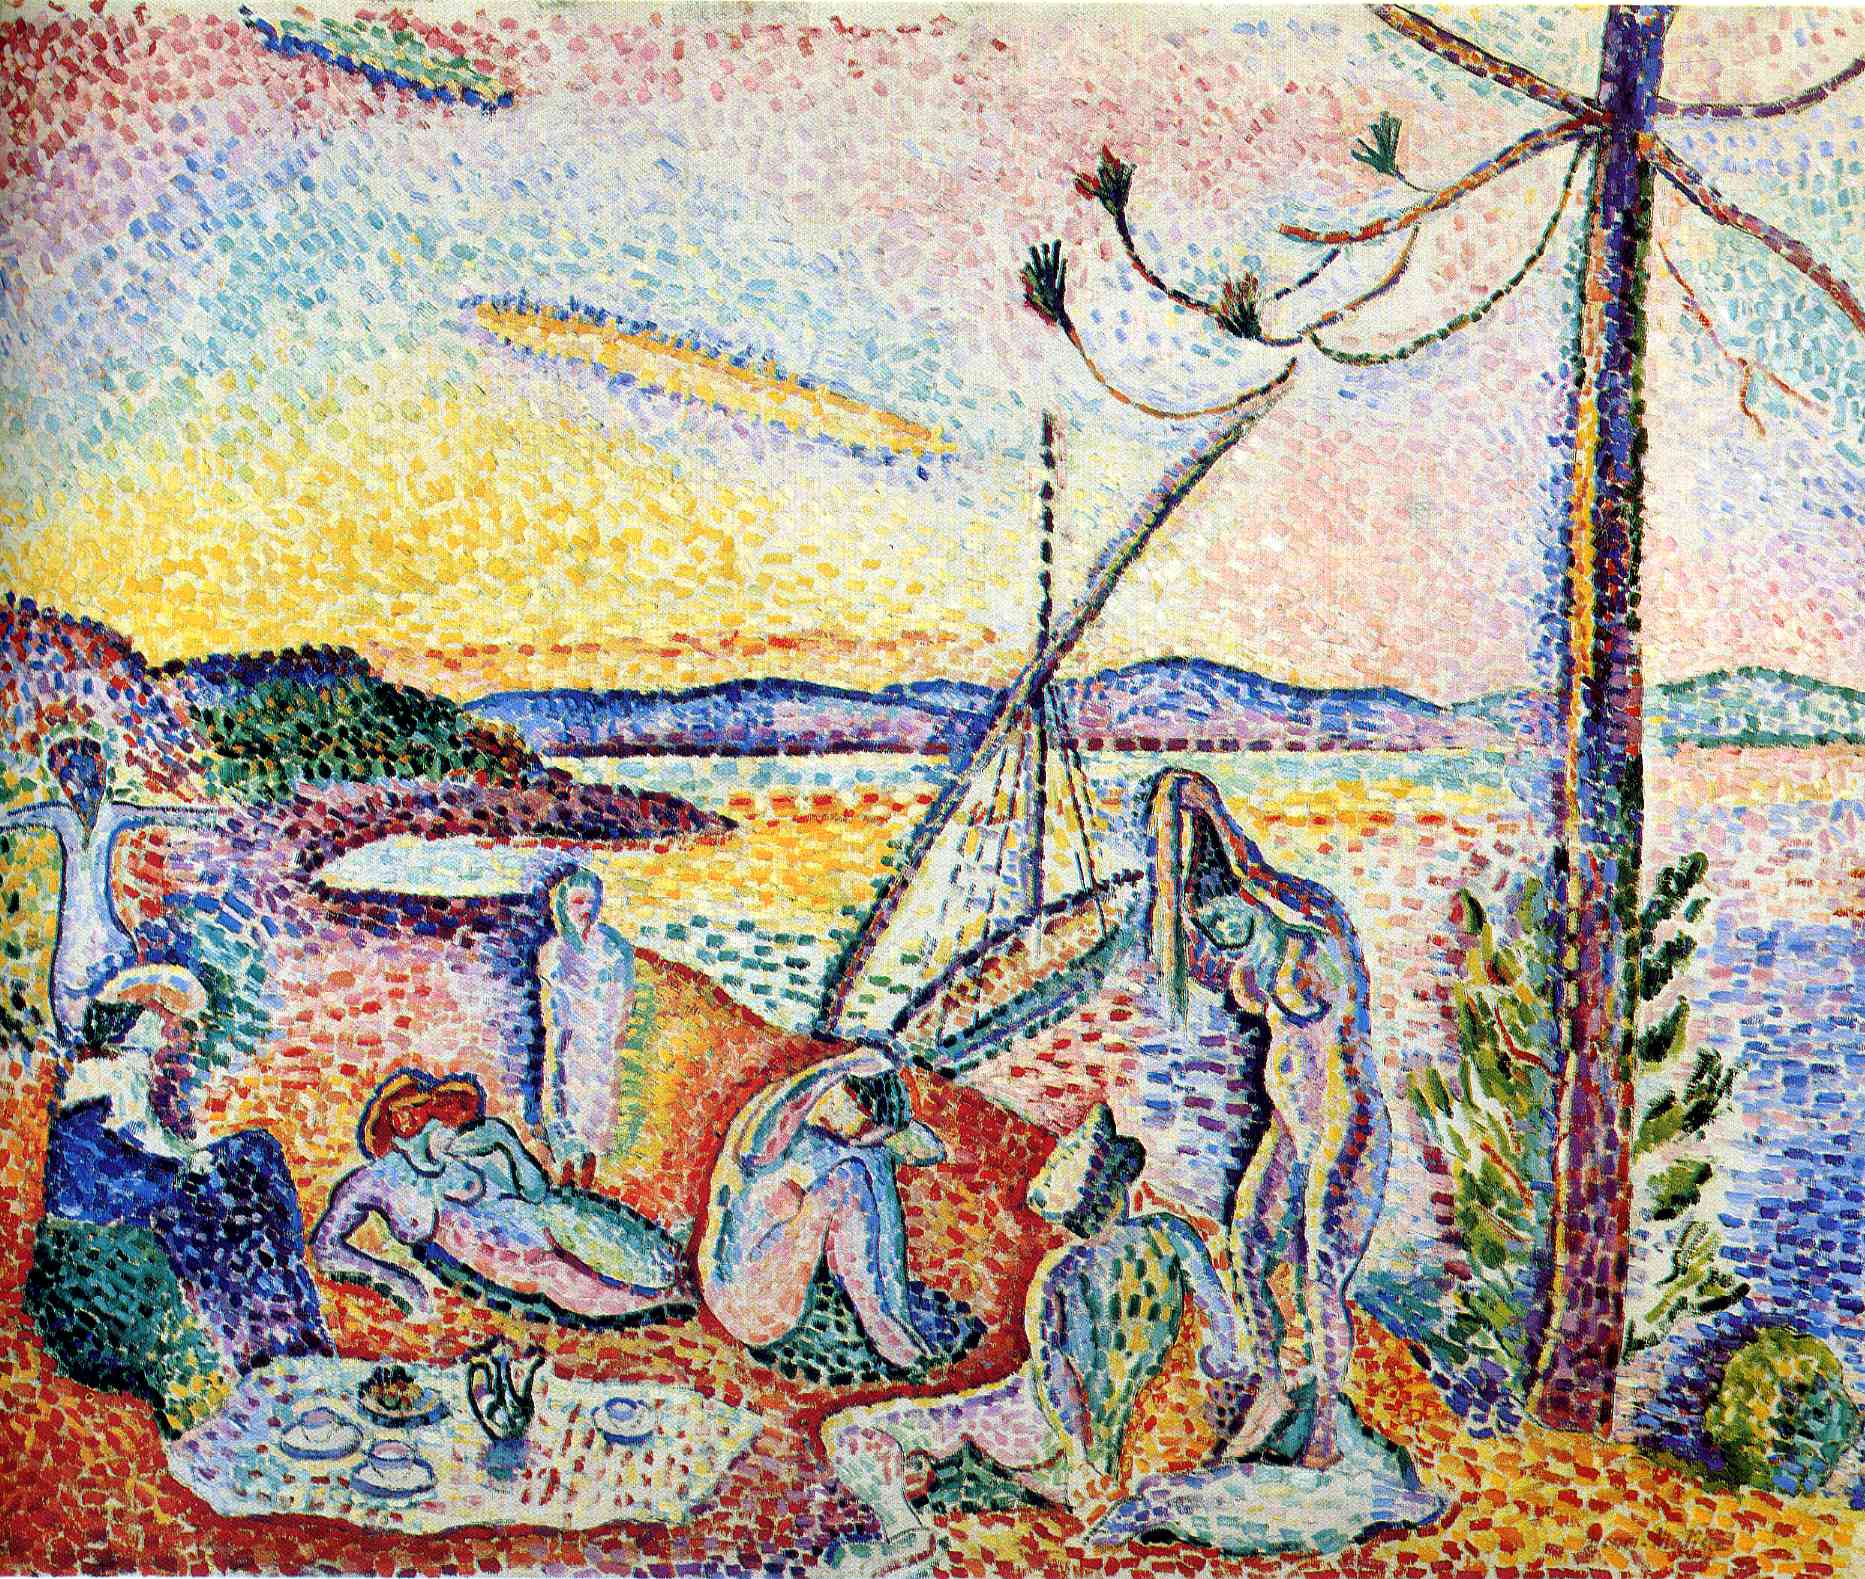 Lüks, Huzur ve Keyif by Henri Matisse - 1905 - 98 x 118 cm 